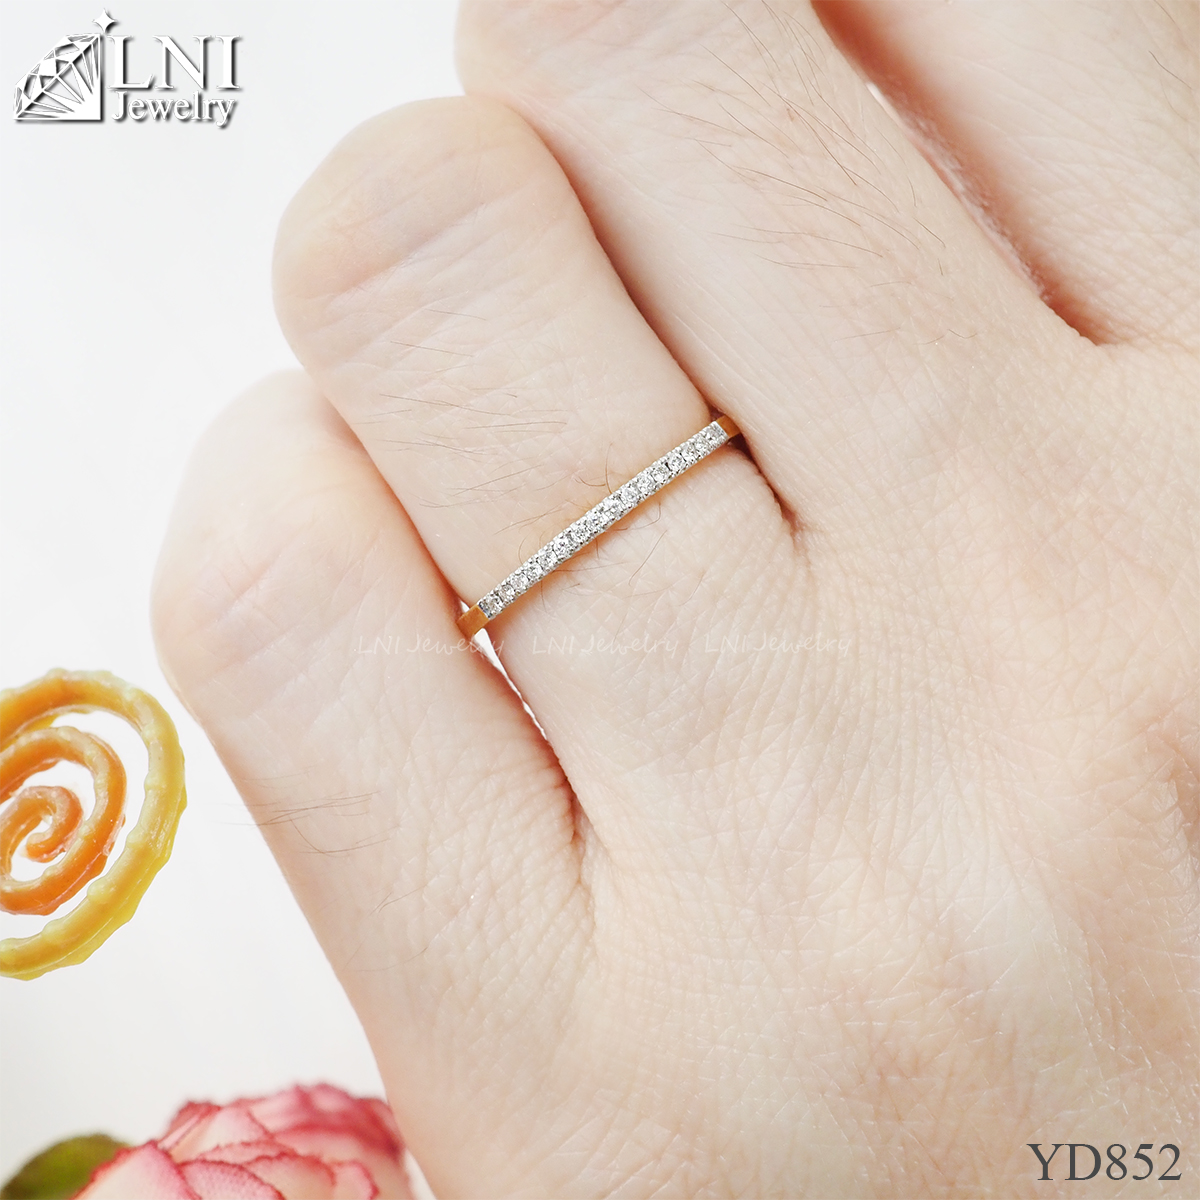 YD852 Band Diamond Ring